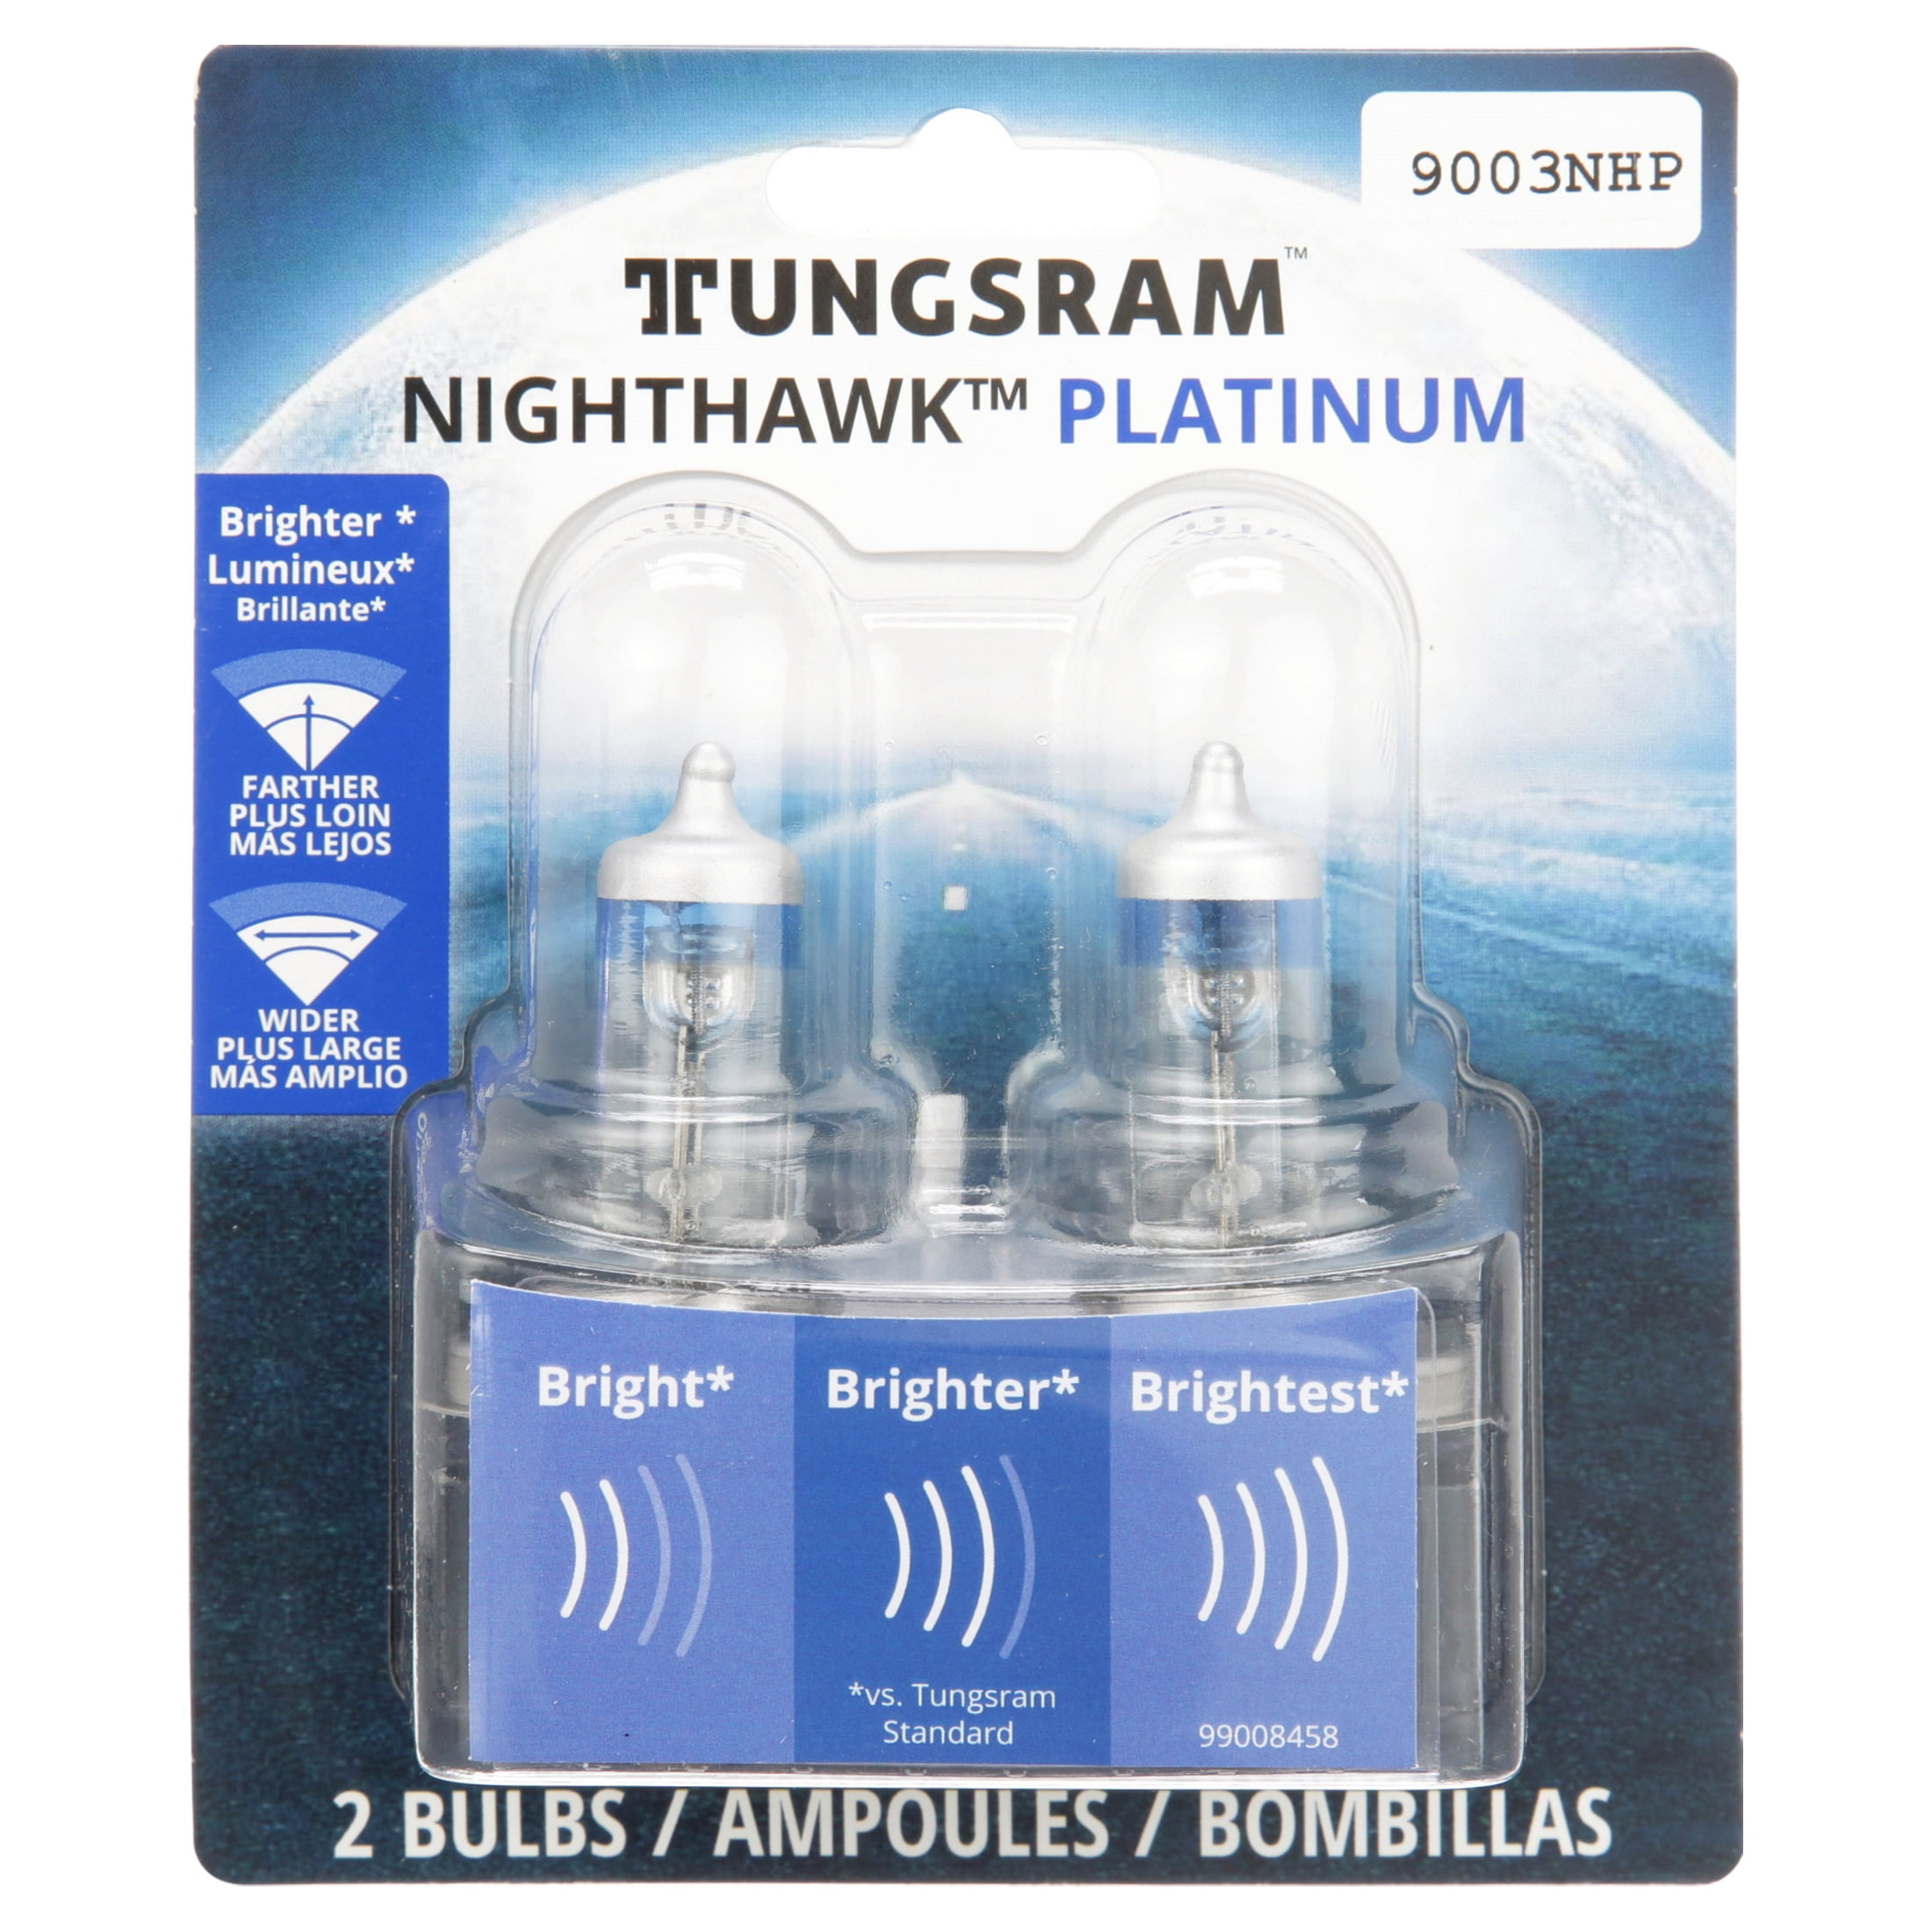 Tungsram 9003 Nighthawk Platinum Halogen Bulb, 2-Pack